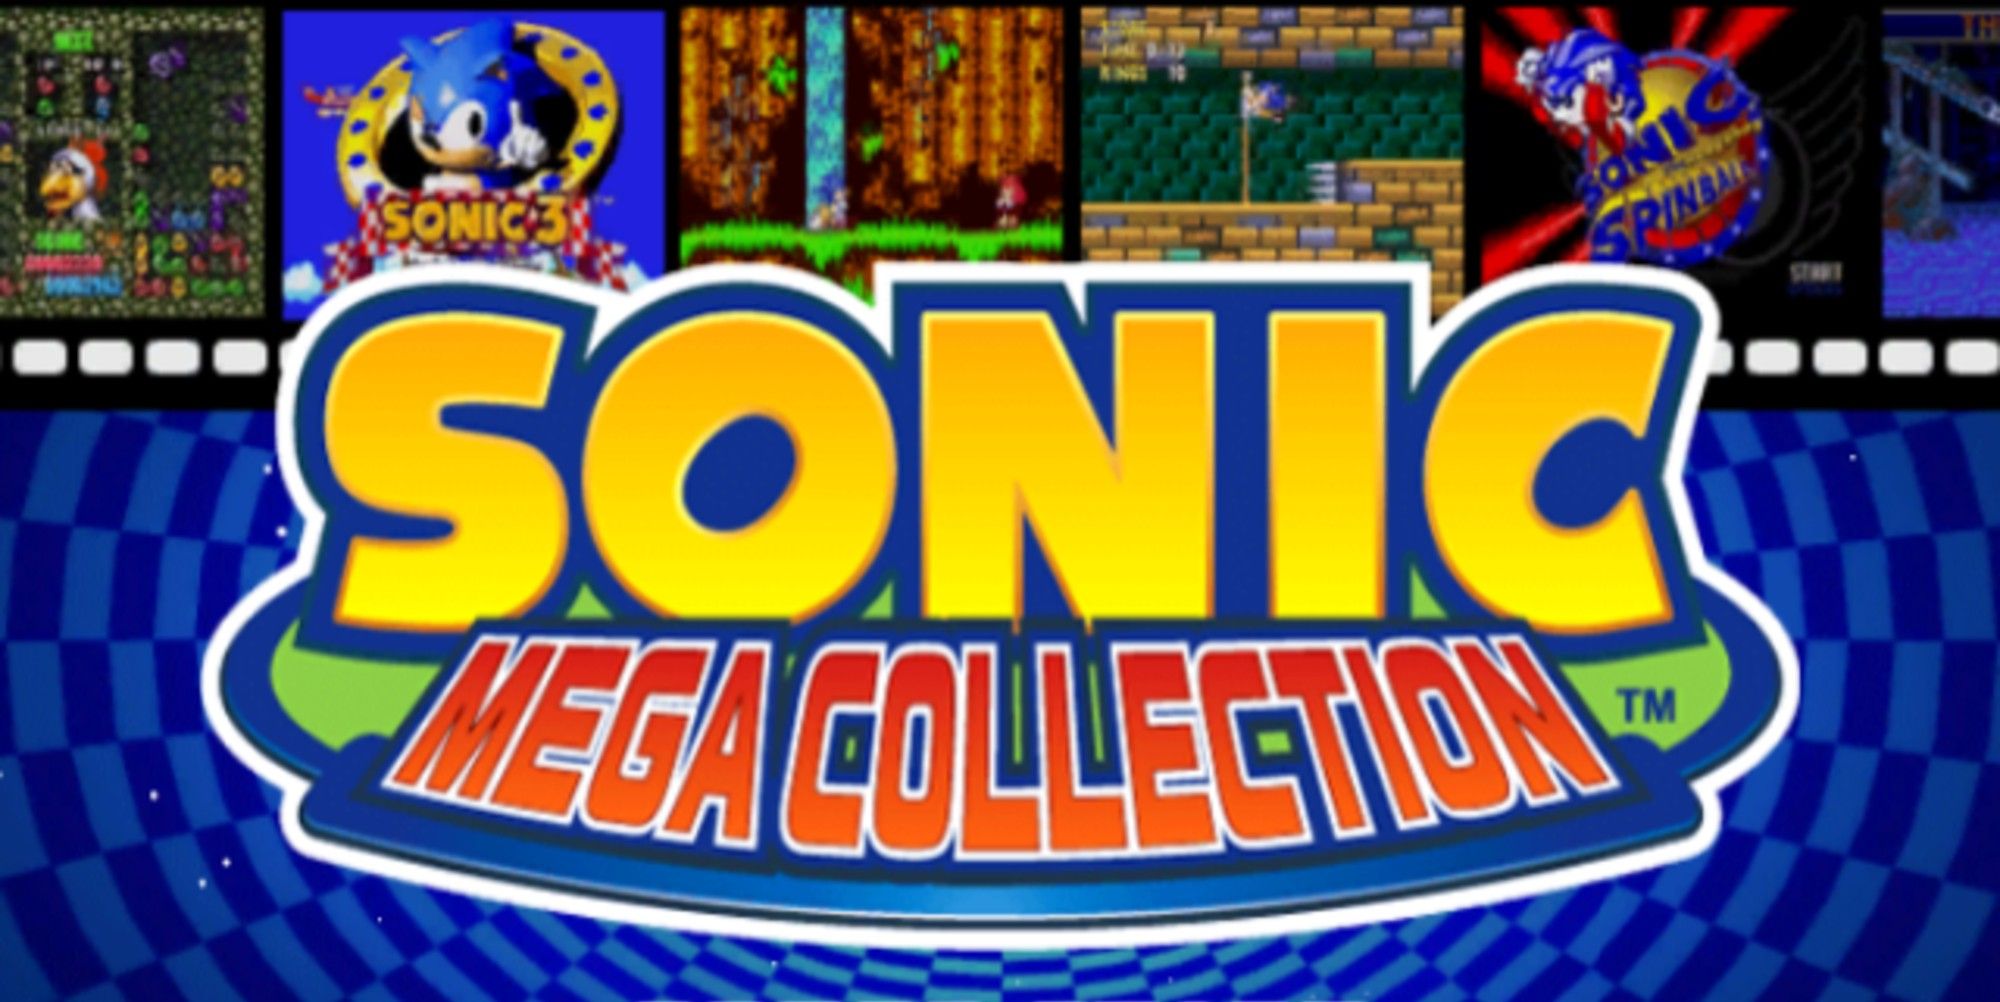 Collezione Sonic Megapng